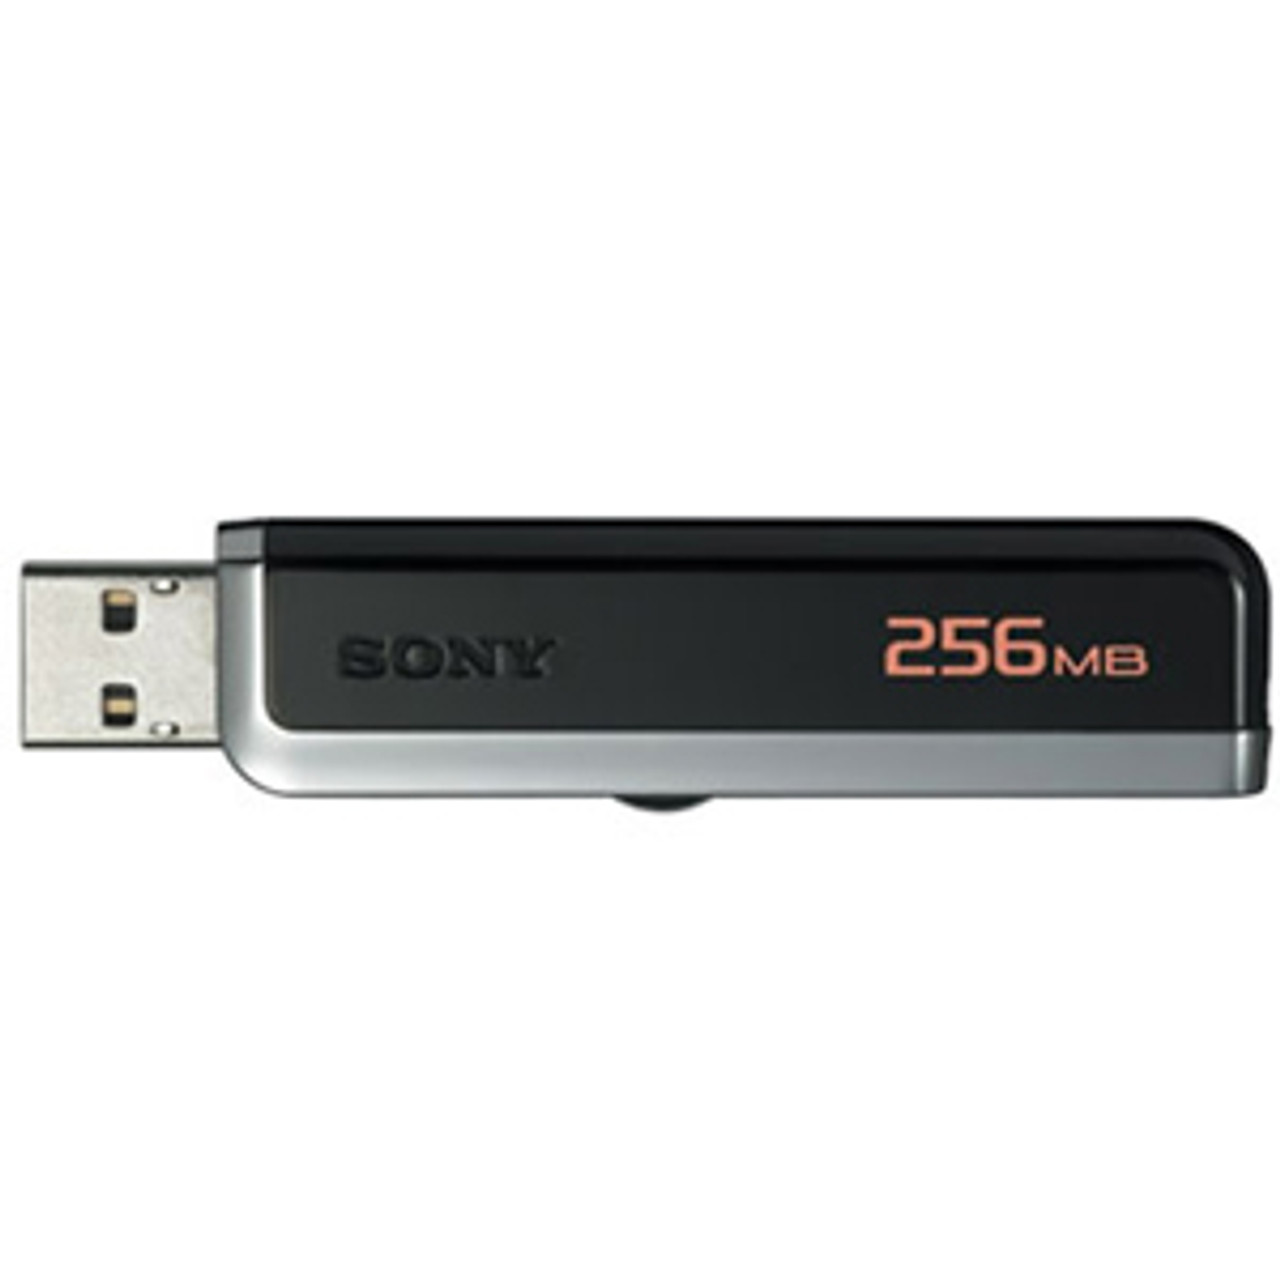 Shah sneen voksen SNYUSM256S Sony MicroVault 256MB USB 2.0 Flash Drive